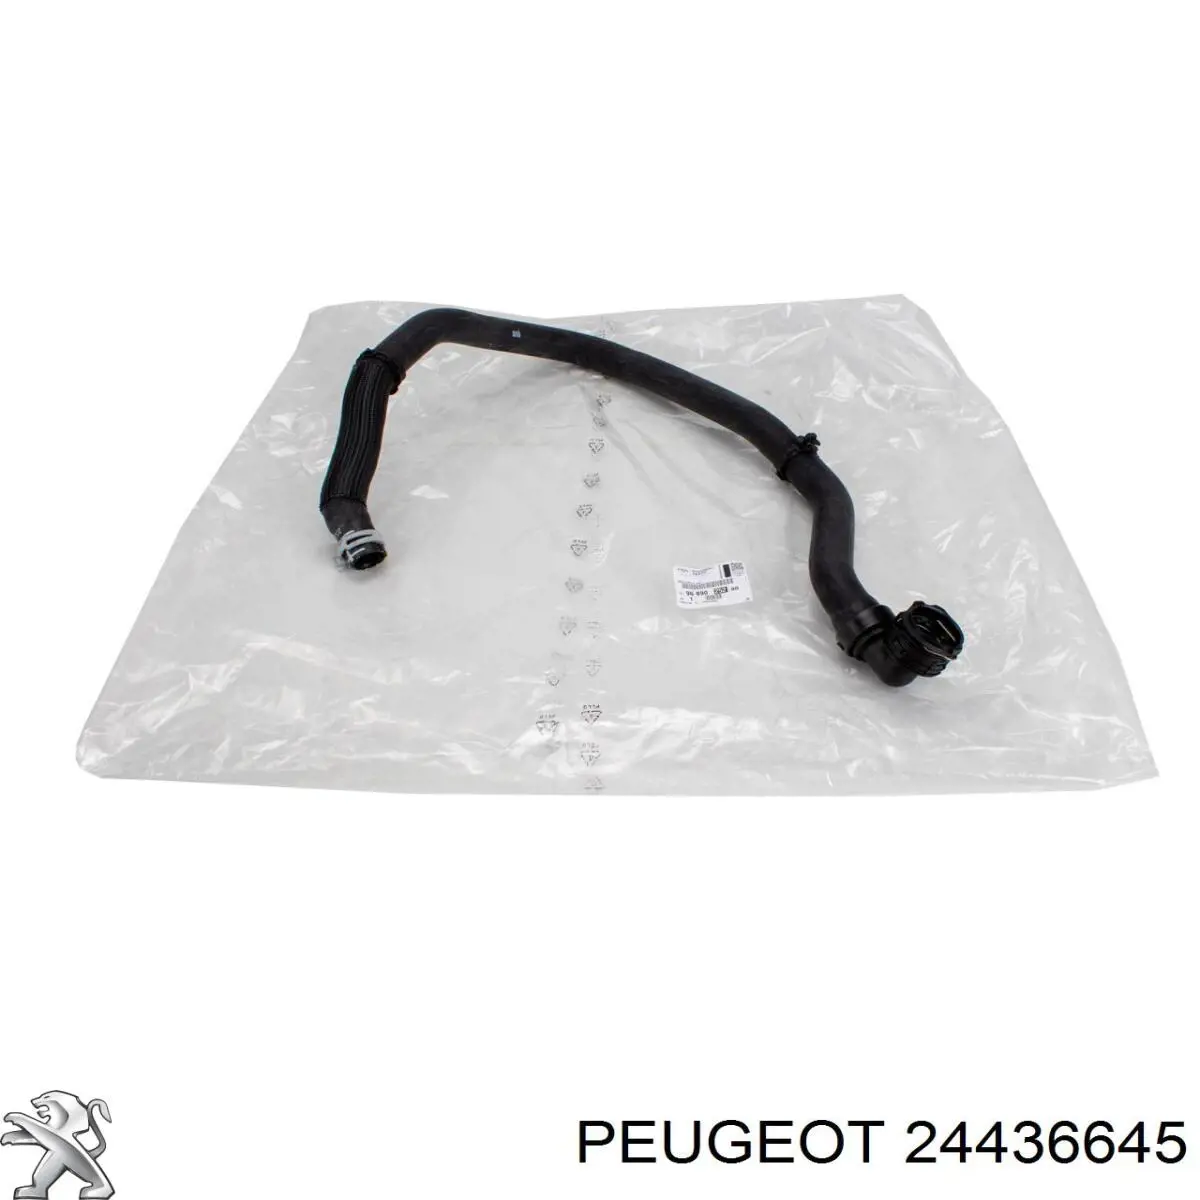 24436645 Peugeot/Citroen anillo de sellado de la manguera de retorno del compresor